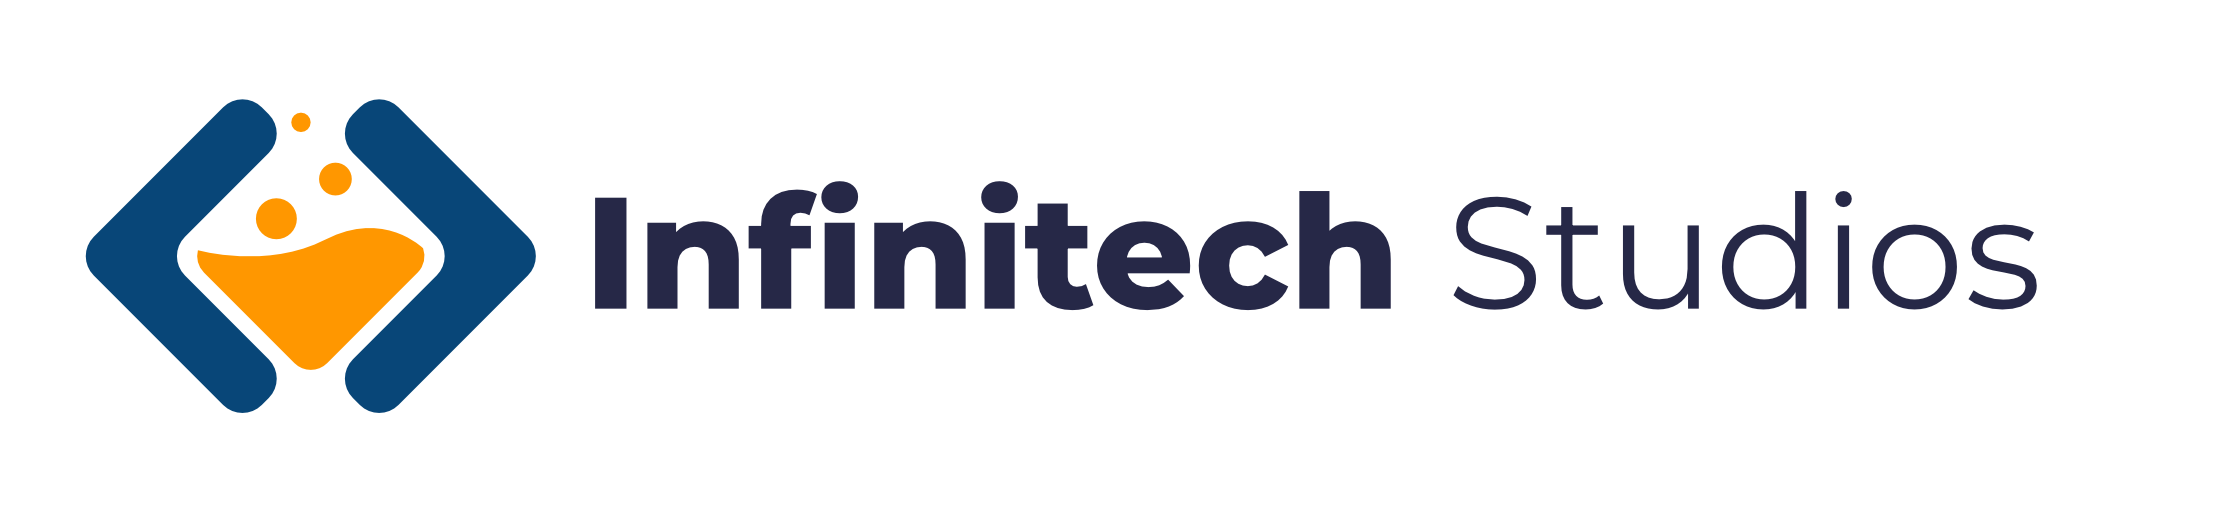 Infinitech Studios Logo